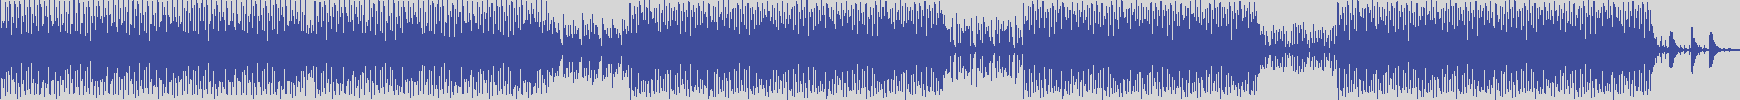 nf_boyz_records [NFY023] Da Rich - AC [Original Mix] audio wave form